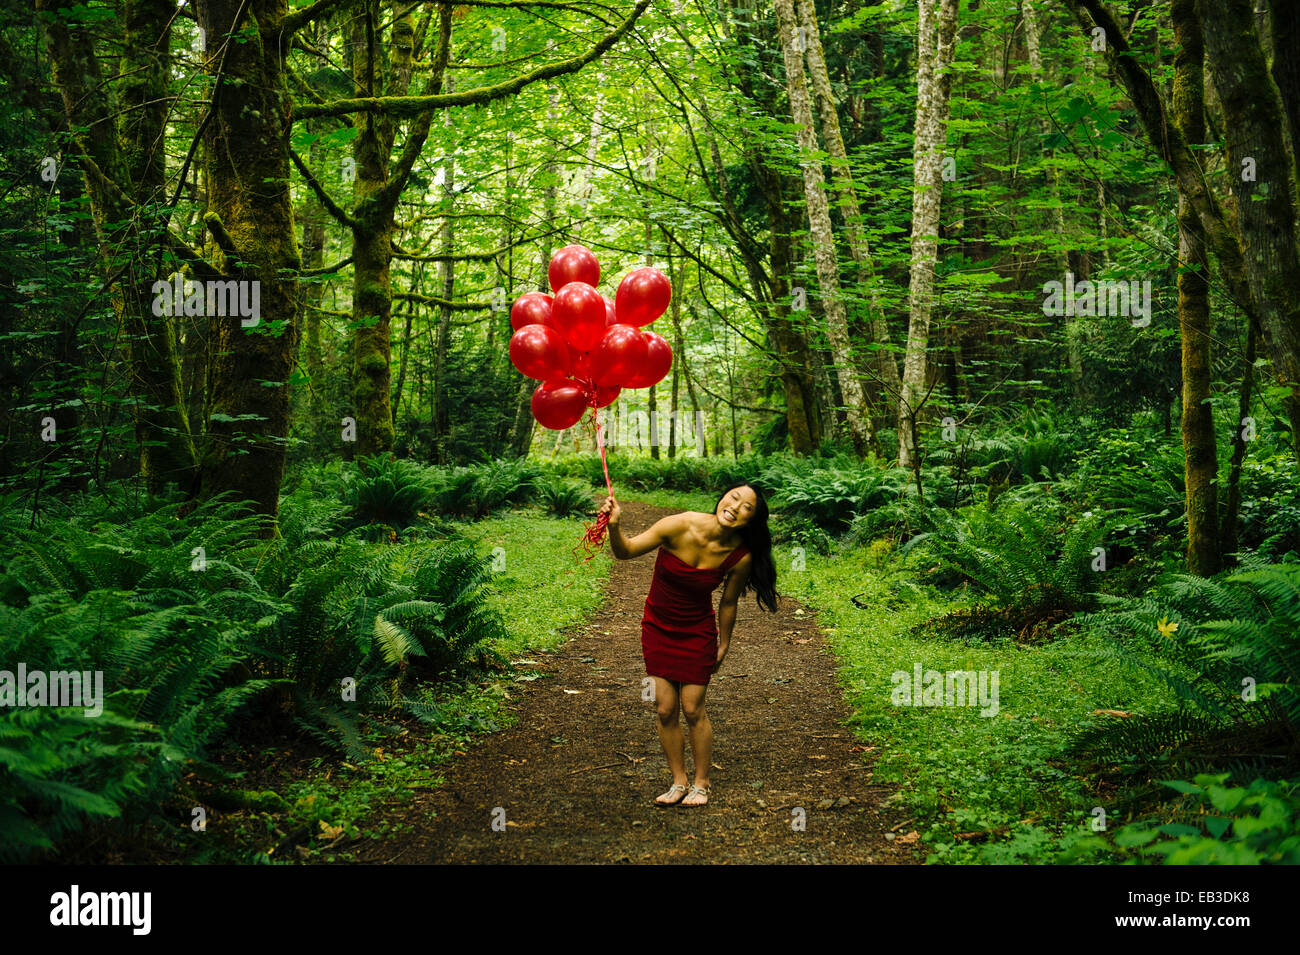 Korean woman holding red balloons dans une forêt luxuriante Banque D'Images